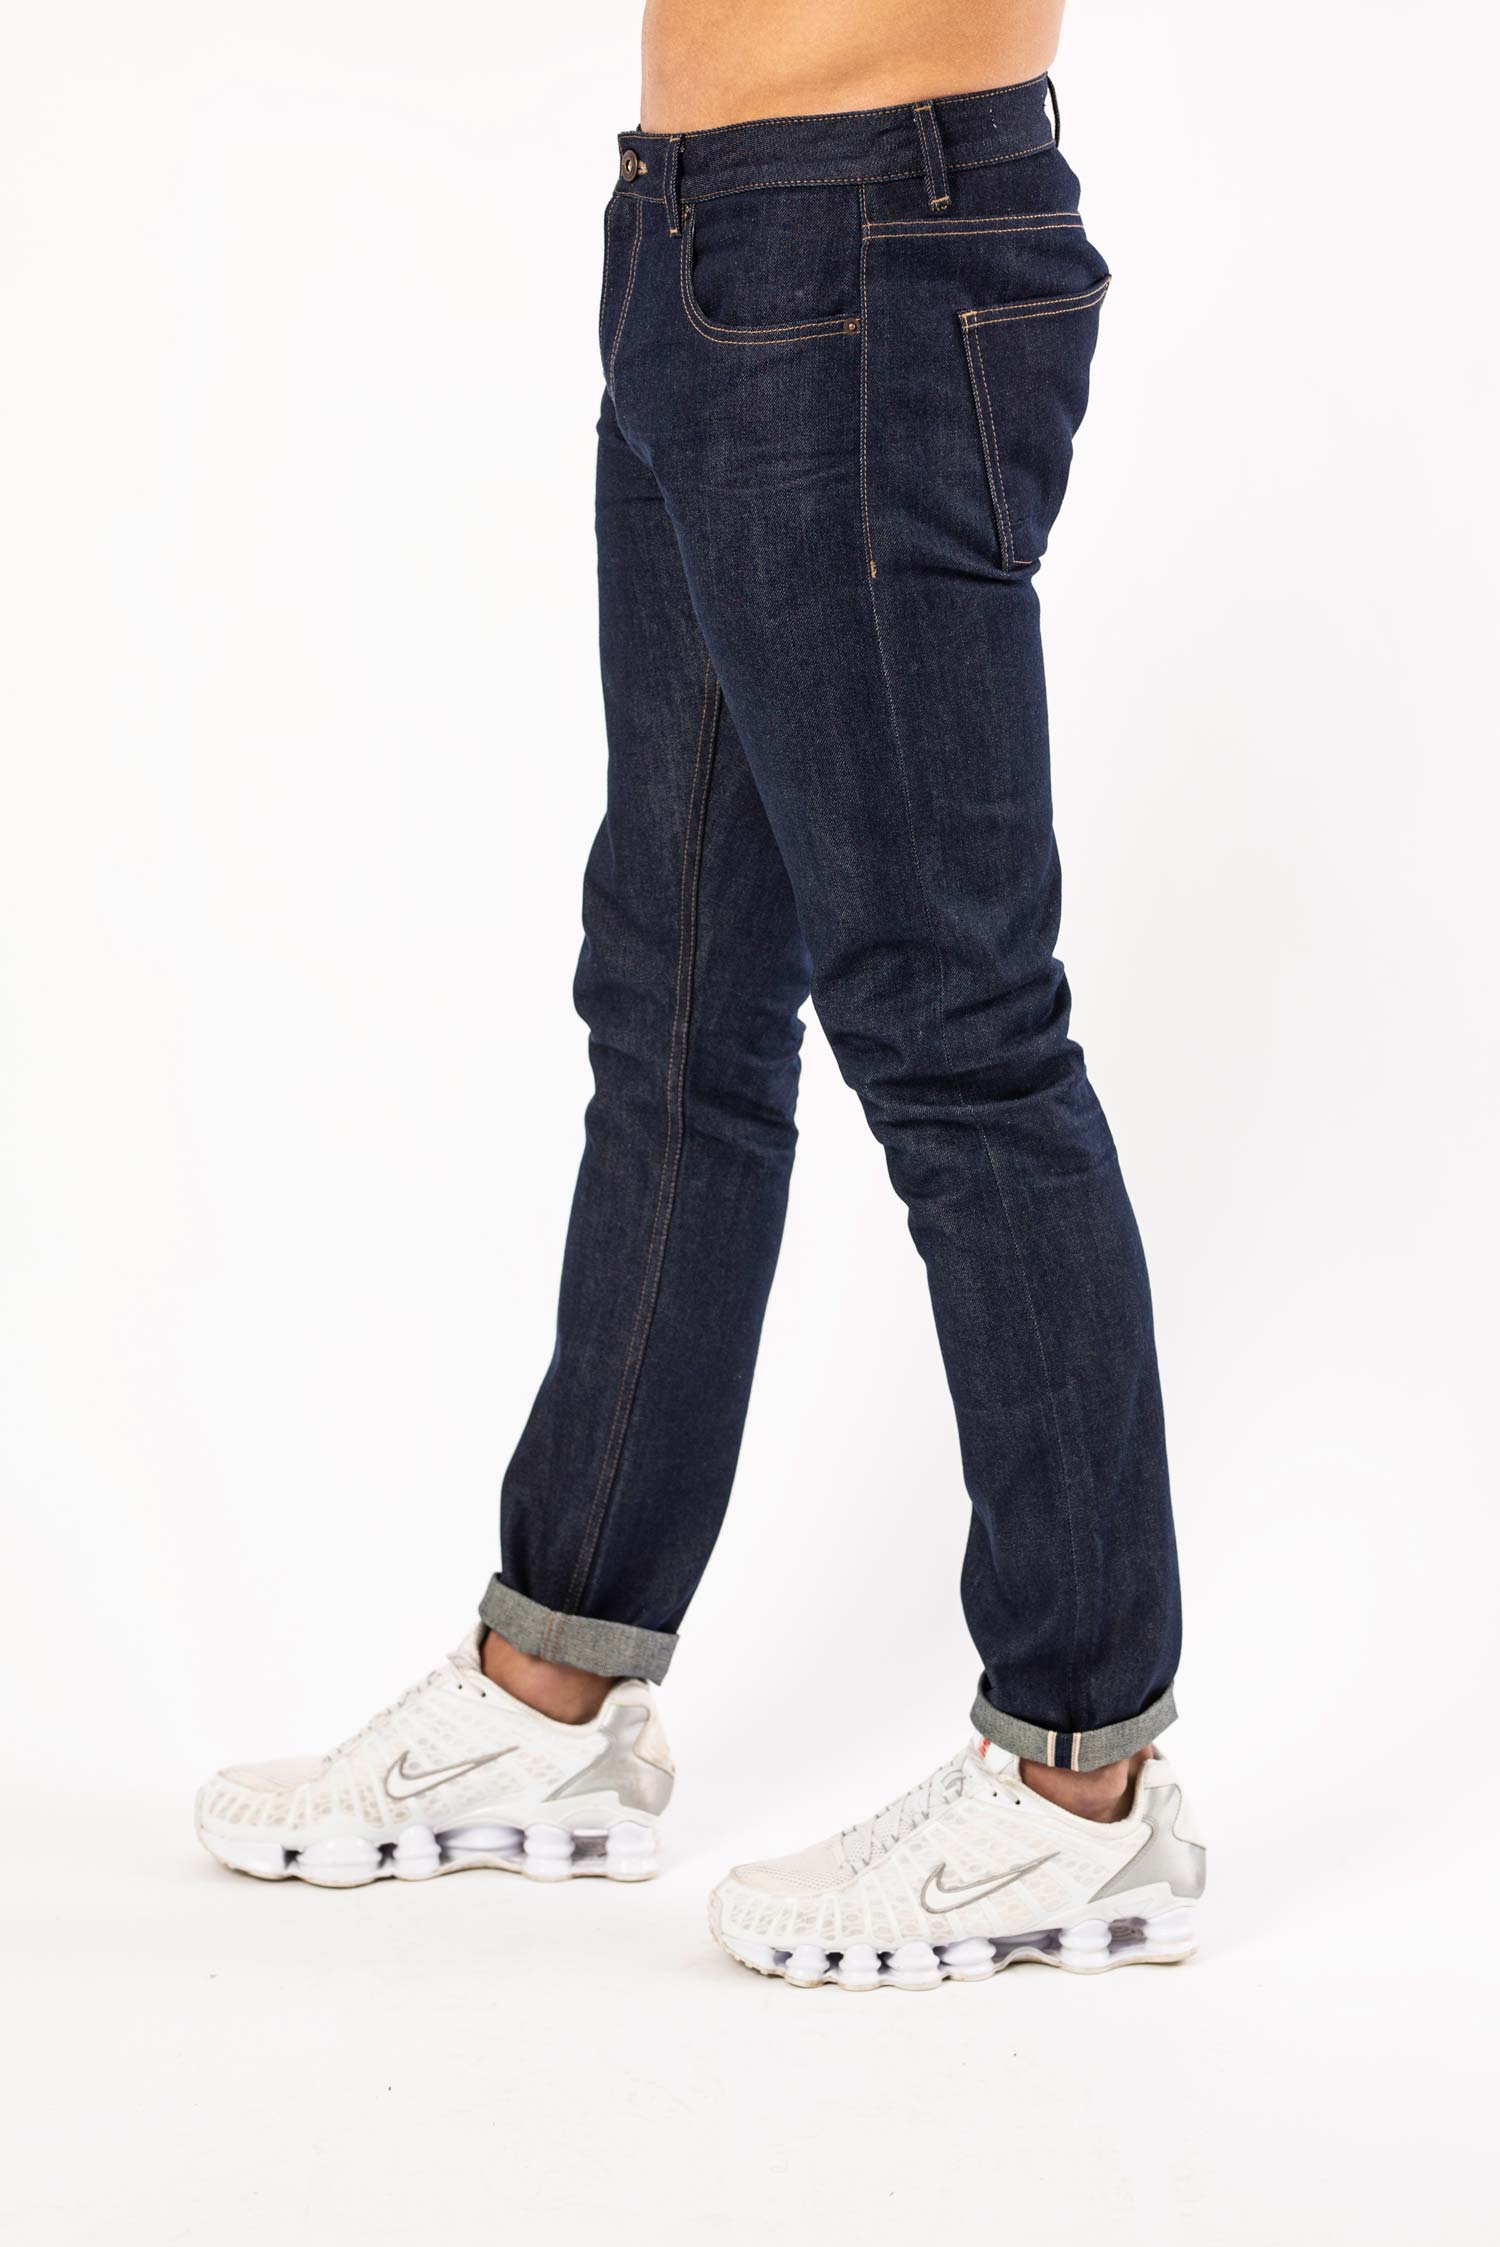 DML Jeans Klondike Slim Fit Selvedge Jeans In Rinse Wash 100% Cotton